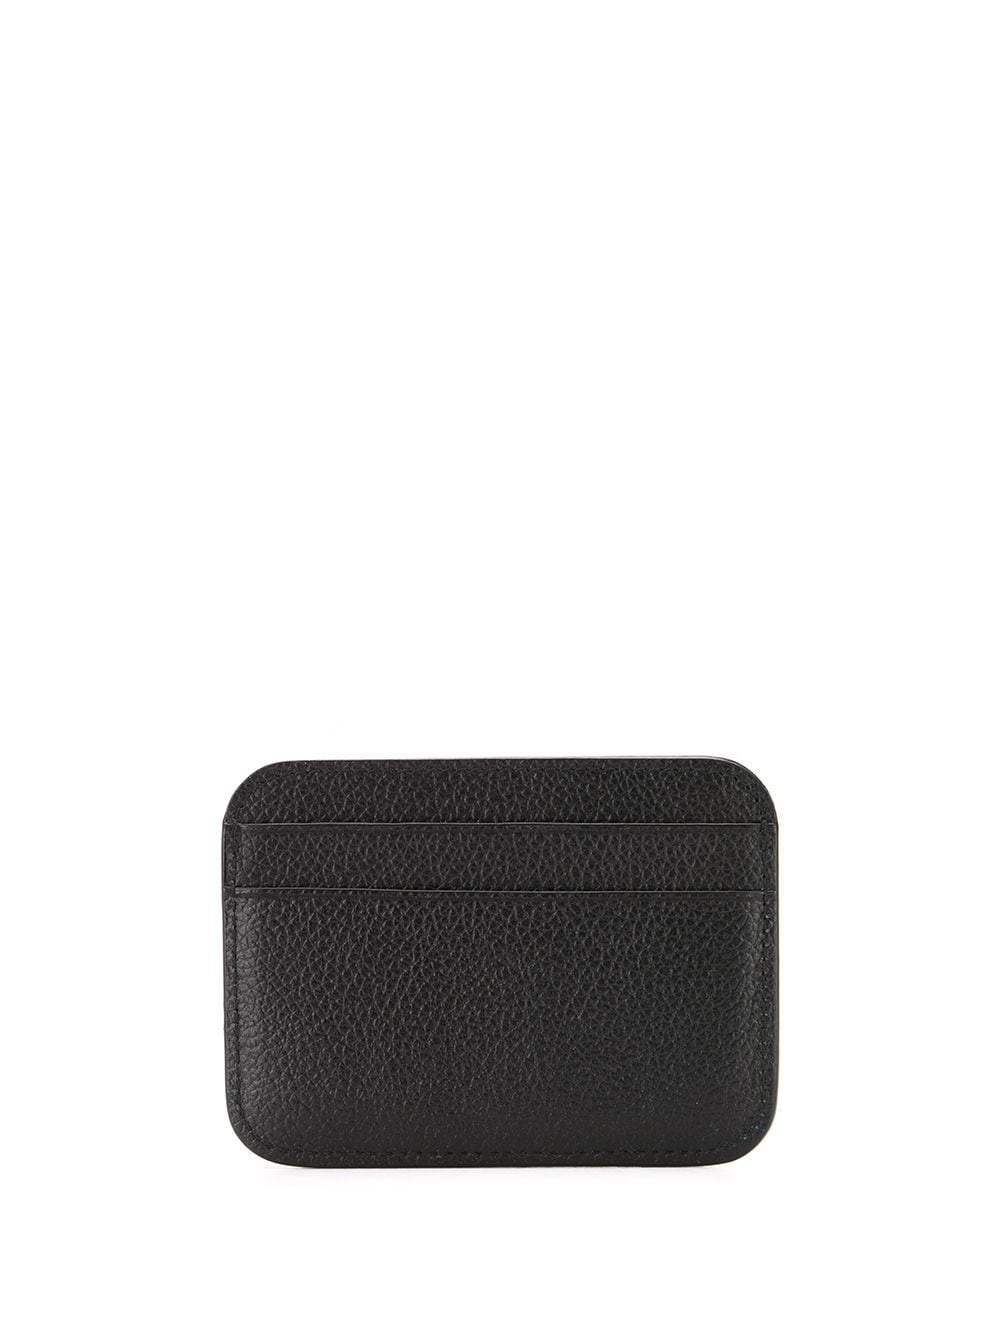 Cash leather credit card case - 3